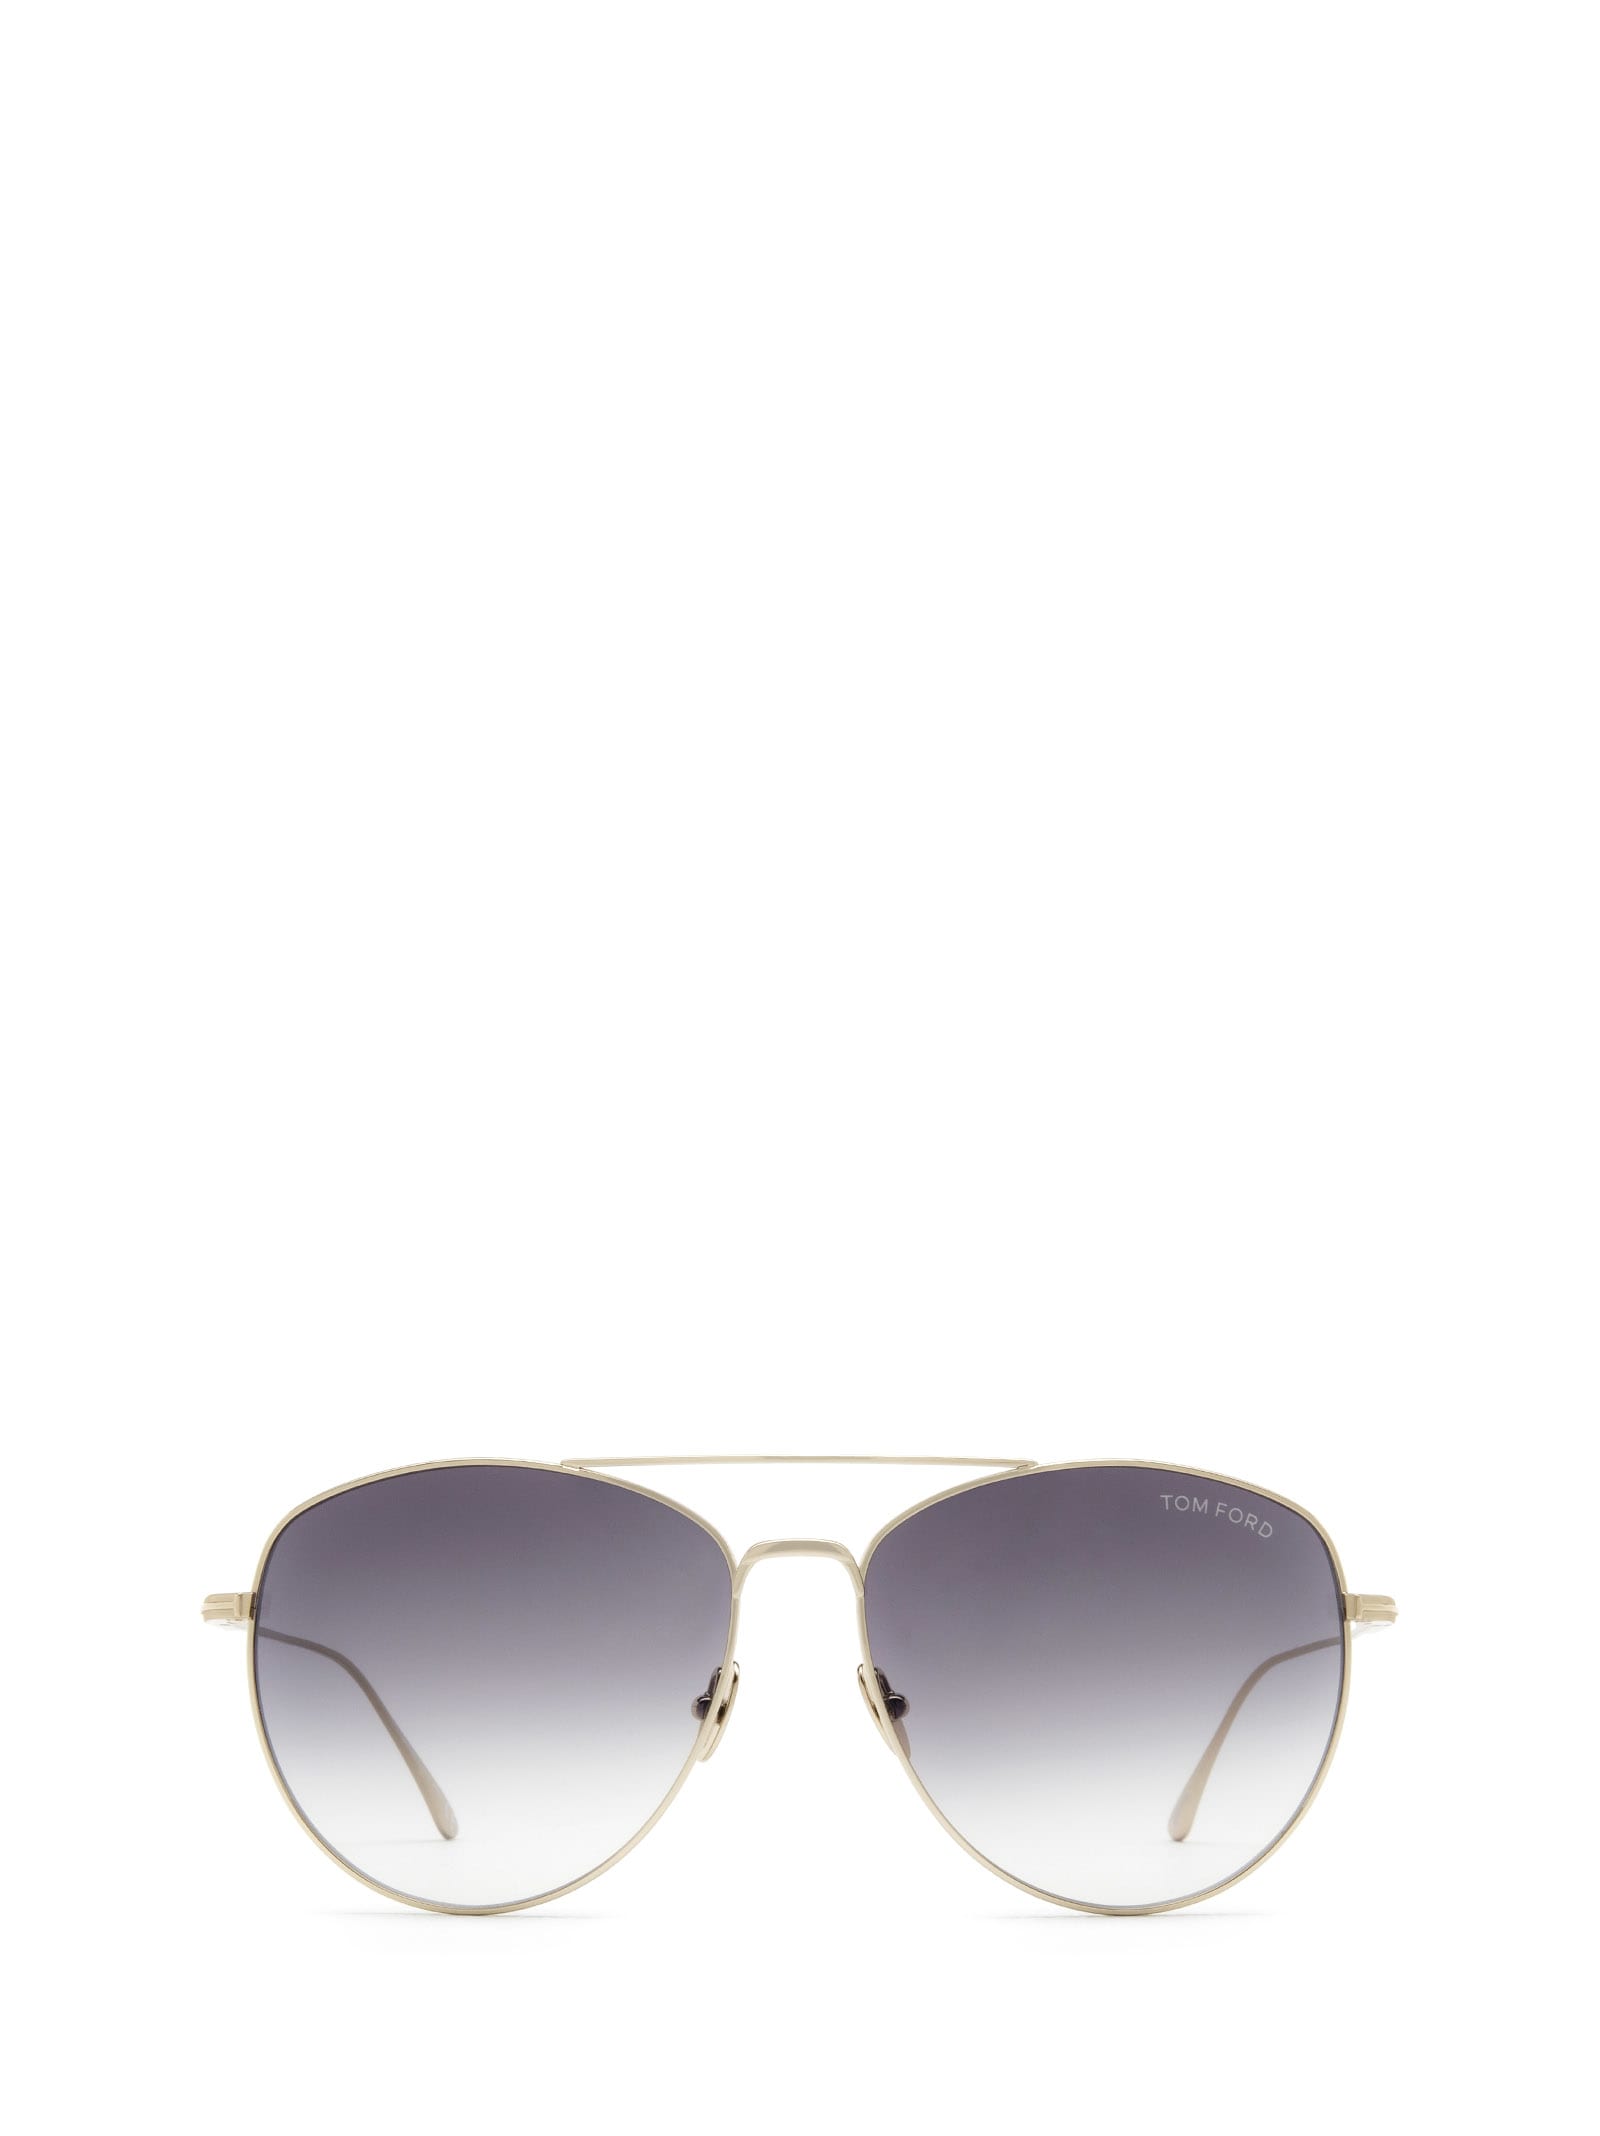 Tom Ford Eyewear Ft0784 Rose Gold Sunglasses